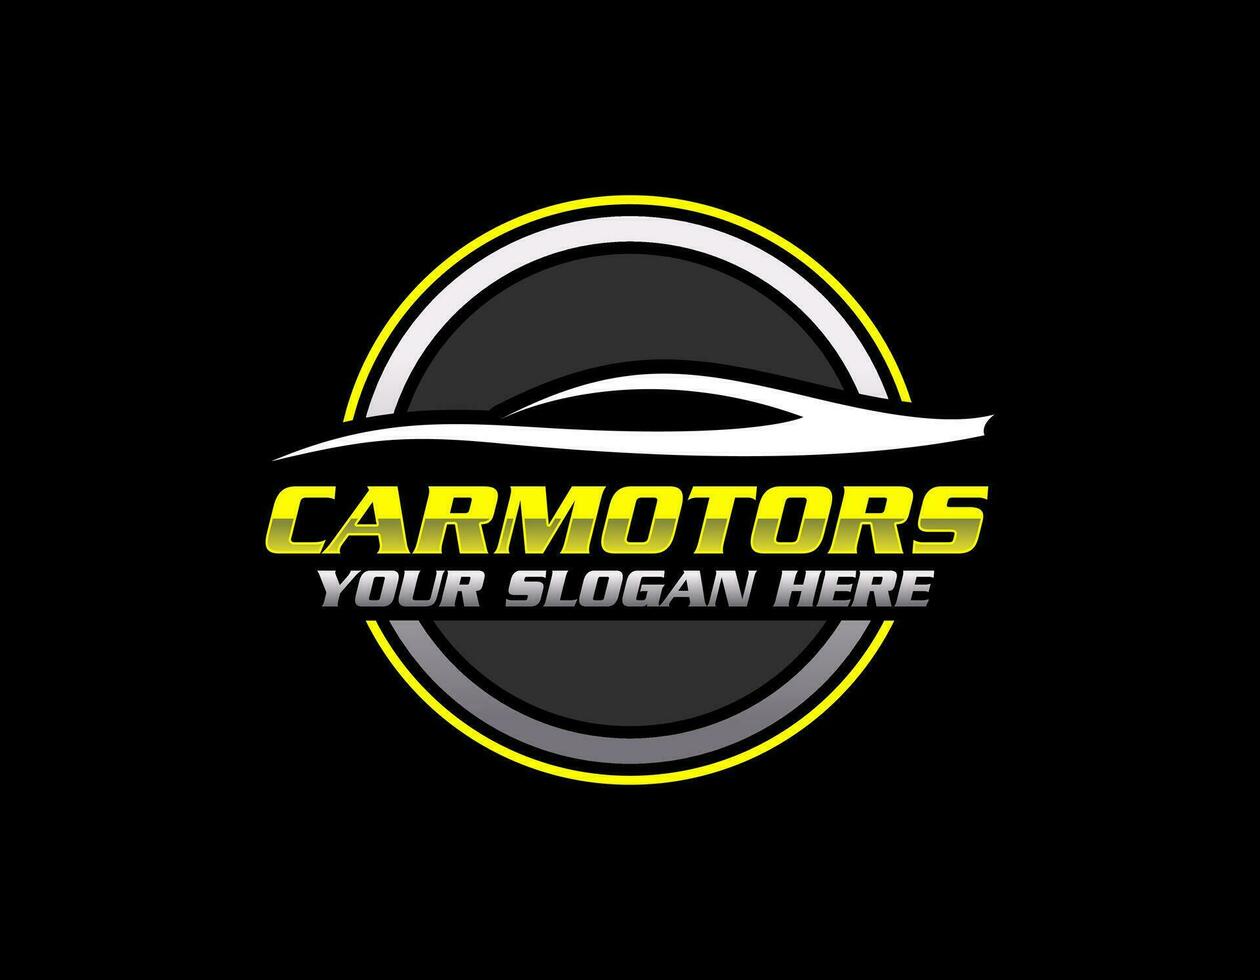 Sports car logo silhouette set. Motor vehicle dealership emblem. Auto garage symbol. Showroom dealer icon. Vector illustration.